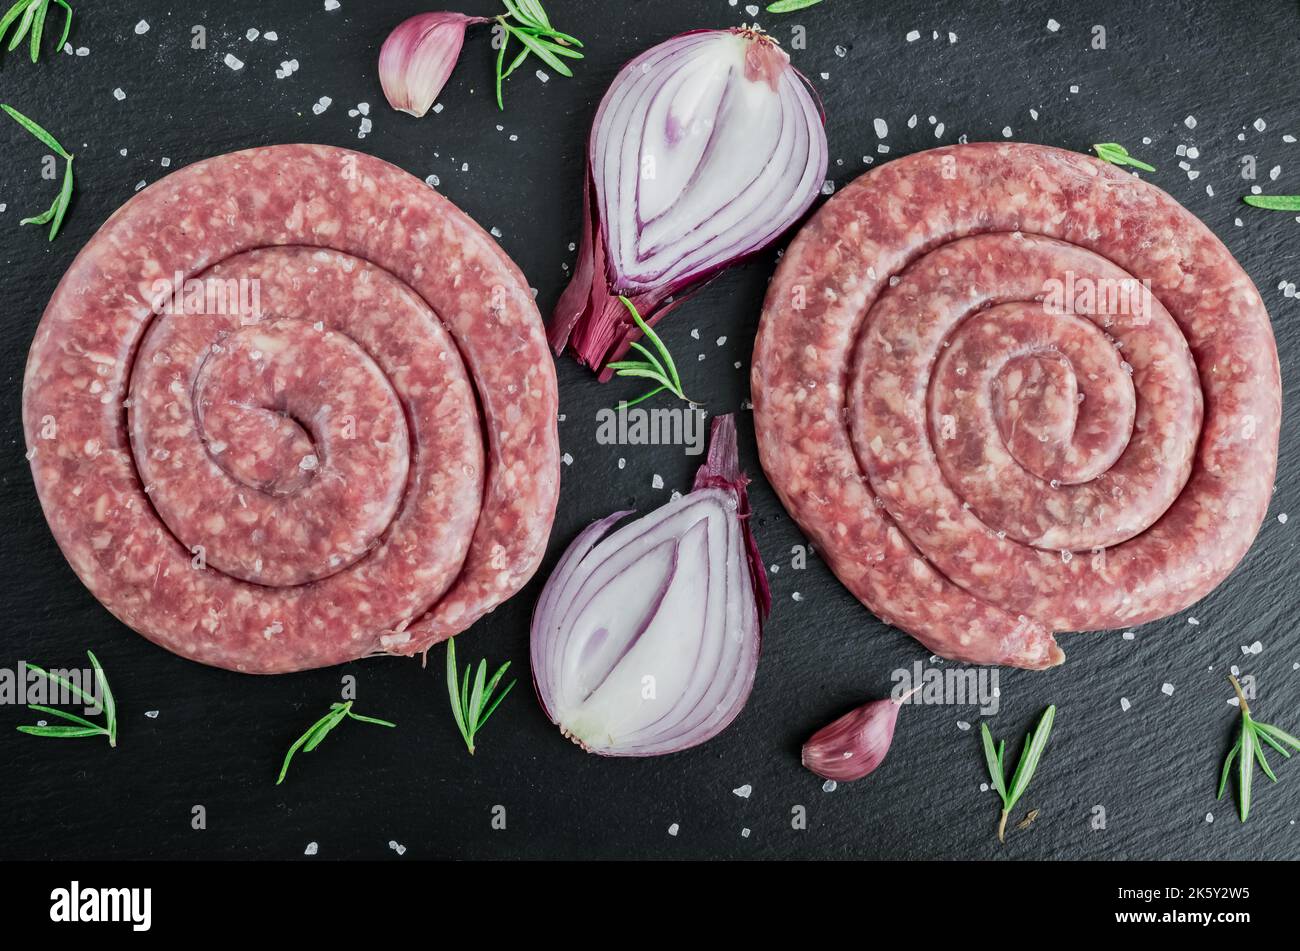 Spiral pork sausage on black board Stock Photo